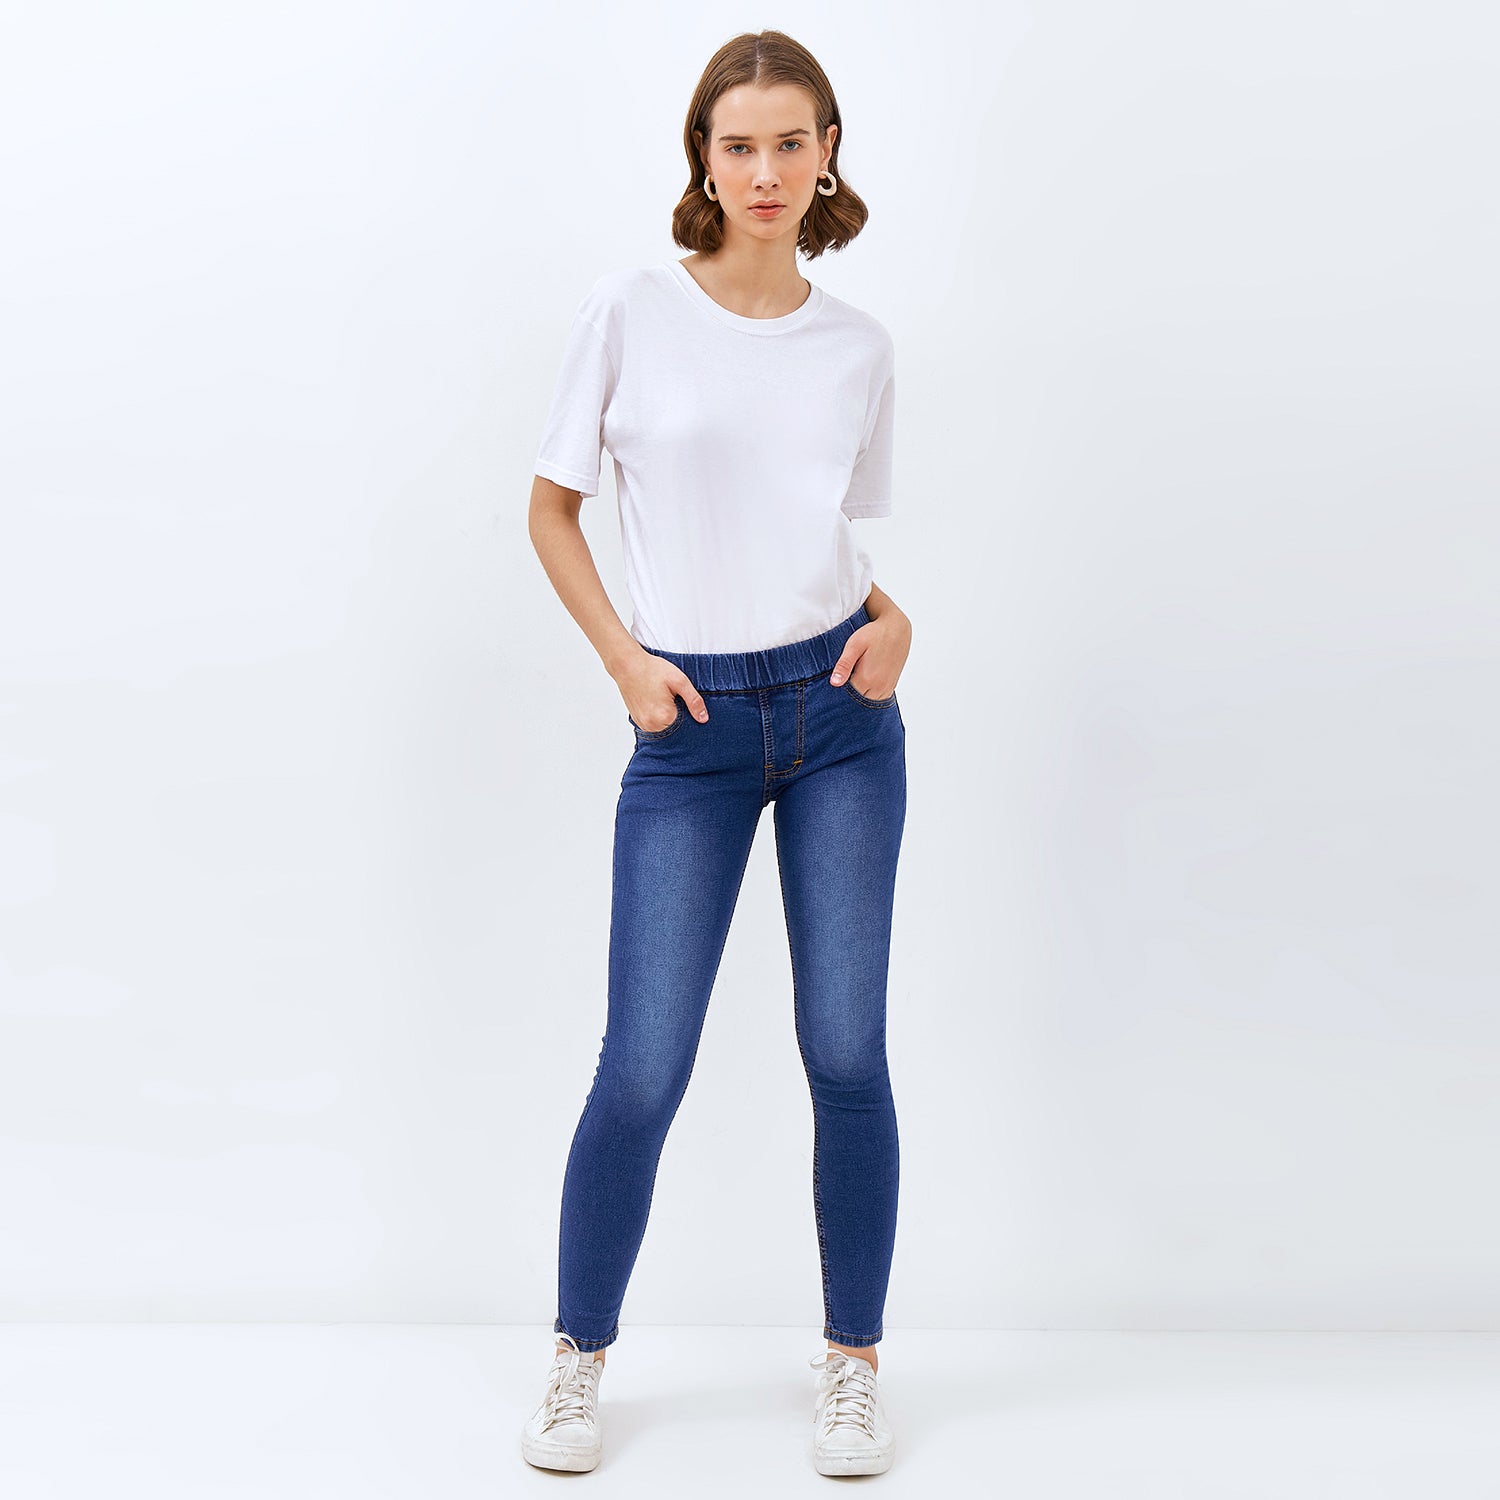 Epic Pants - Celana Jeans Wanita Stretch Blue denim dan Black [MYJLG 01]